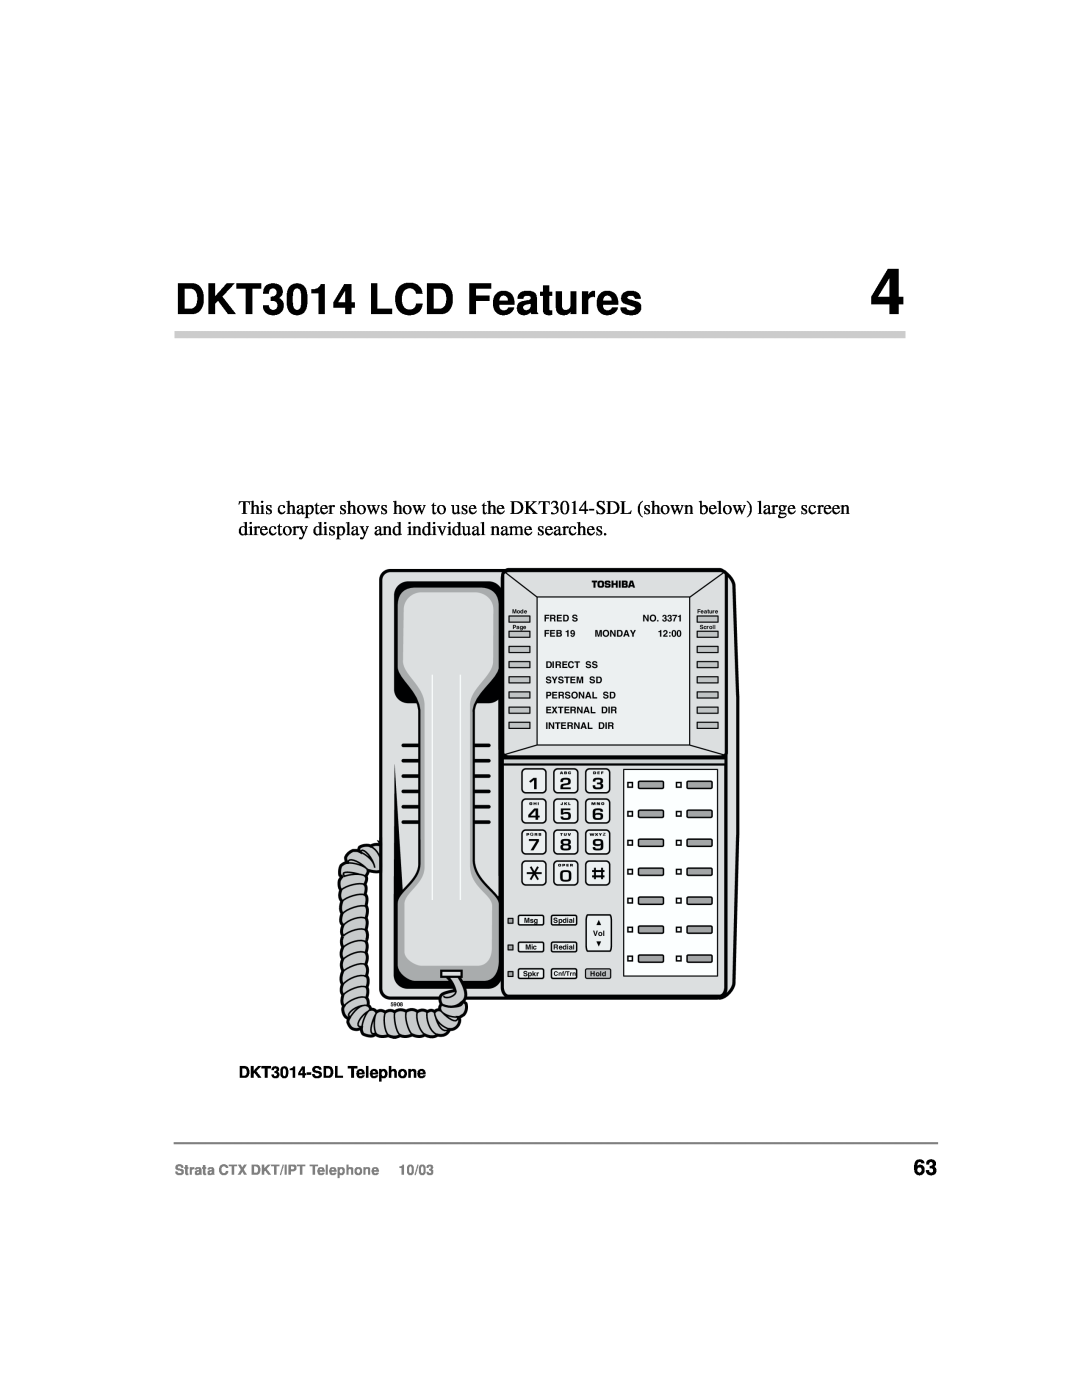 Toshiba DKT3014 LCD Features, DKT3014-SDL Telephone, Strata CTX DKT/IPT Telephone 10/03, Fred S, FEB 19 MONDAY, 1200 